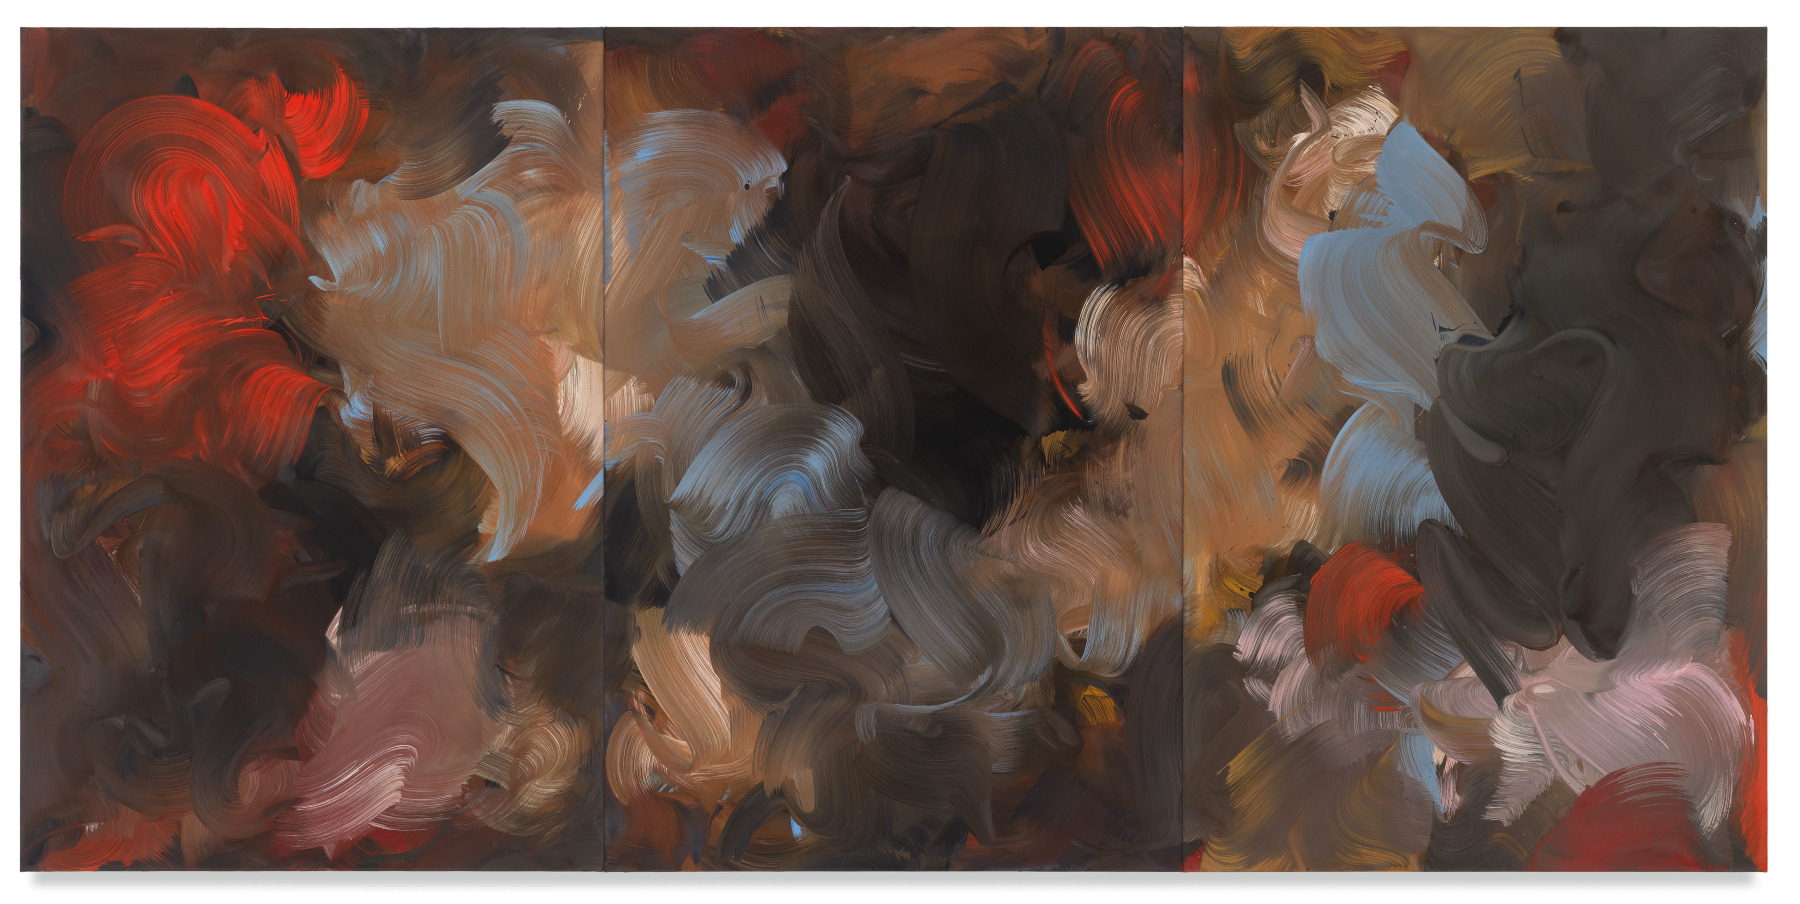 night garden/flight, 2018,&nbsp;Oil on canvas,&nbsp;74 3/4 x 153 1/2 inches,&nbsp;190 x 390 cm,&nbsp;MMG#30958